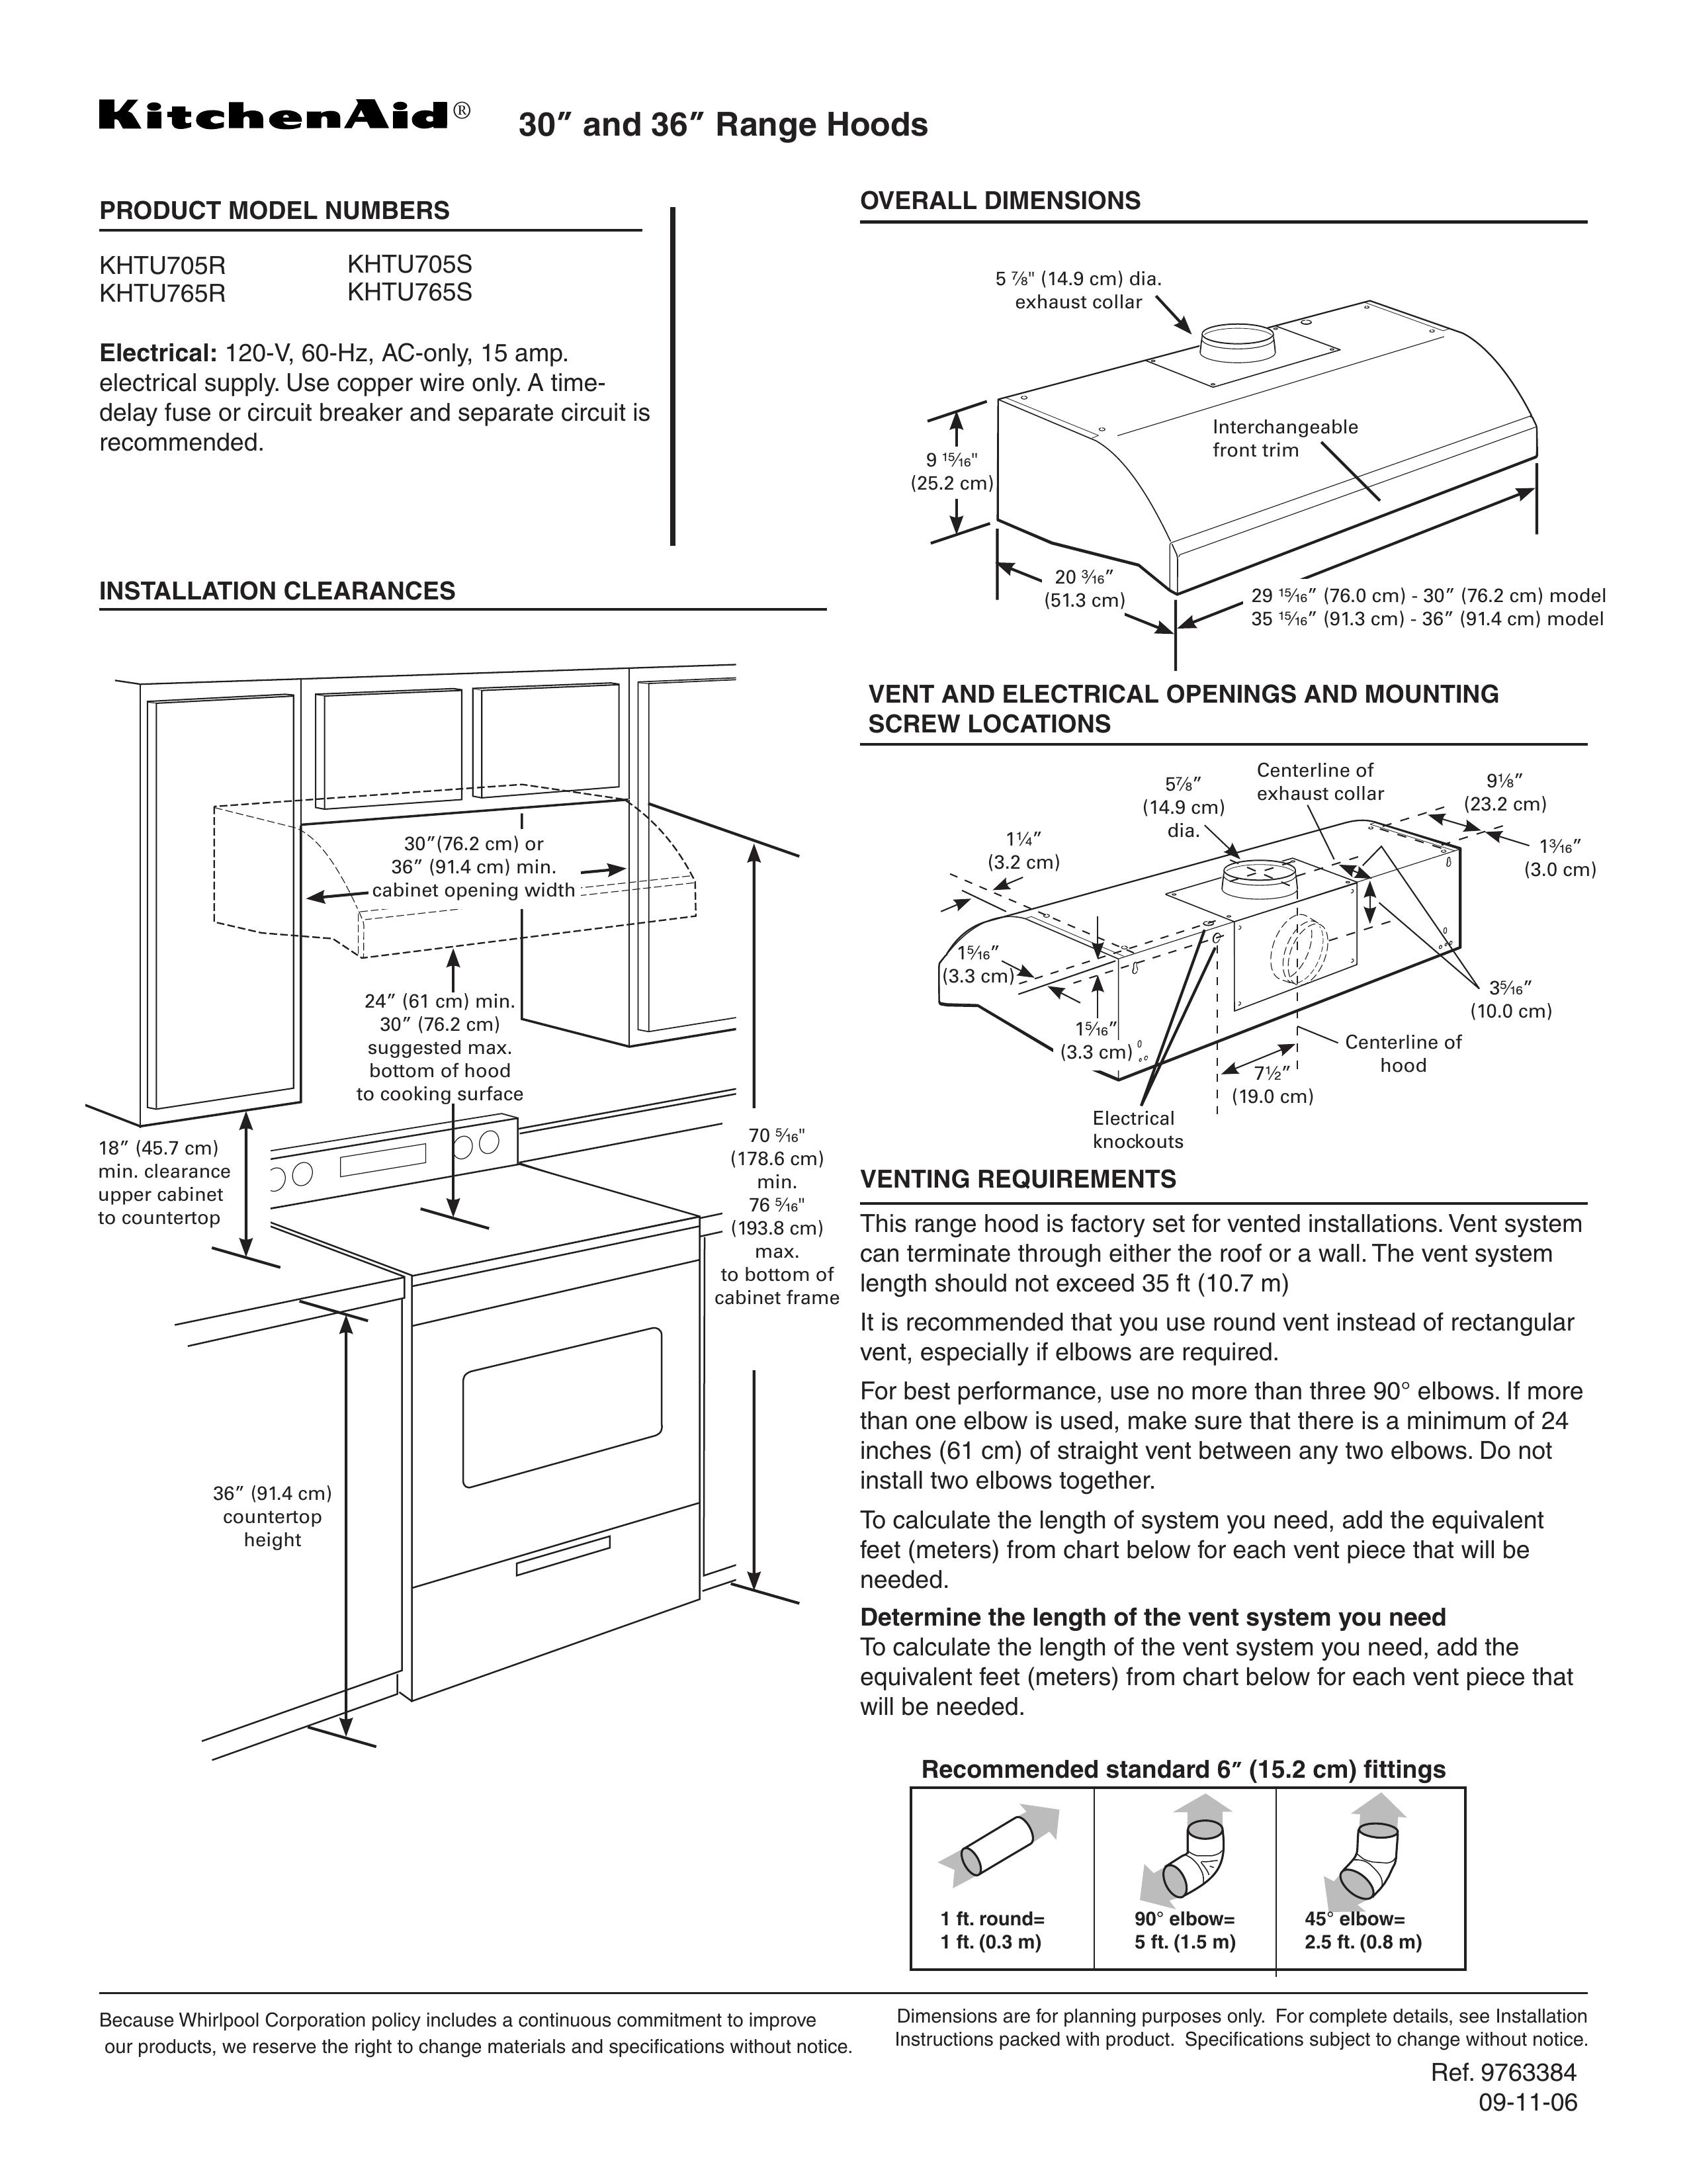 KitchenAid KHTU705R Ventilation Hood User Manual